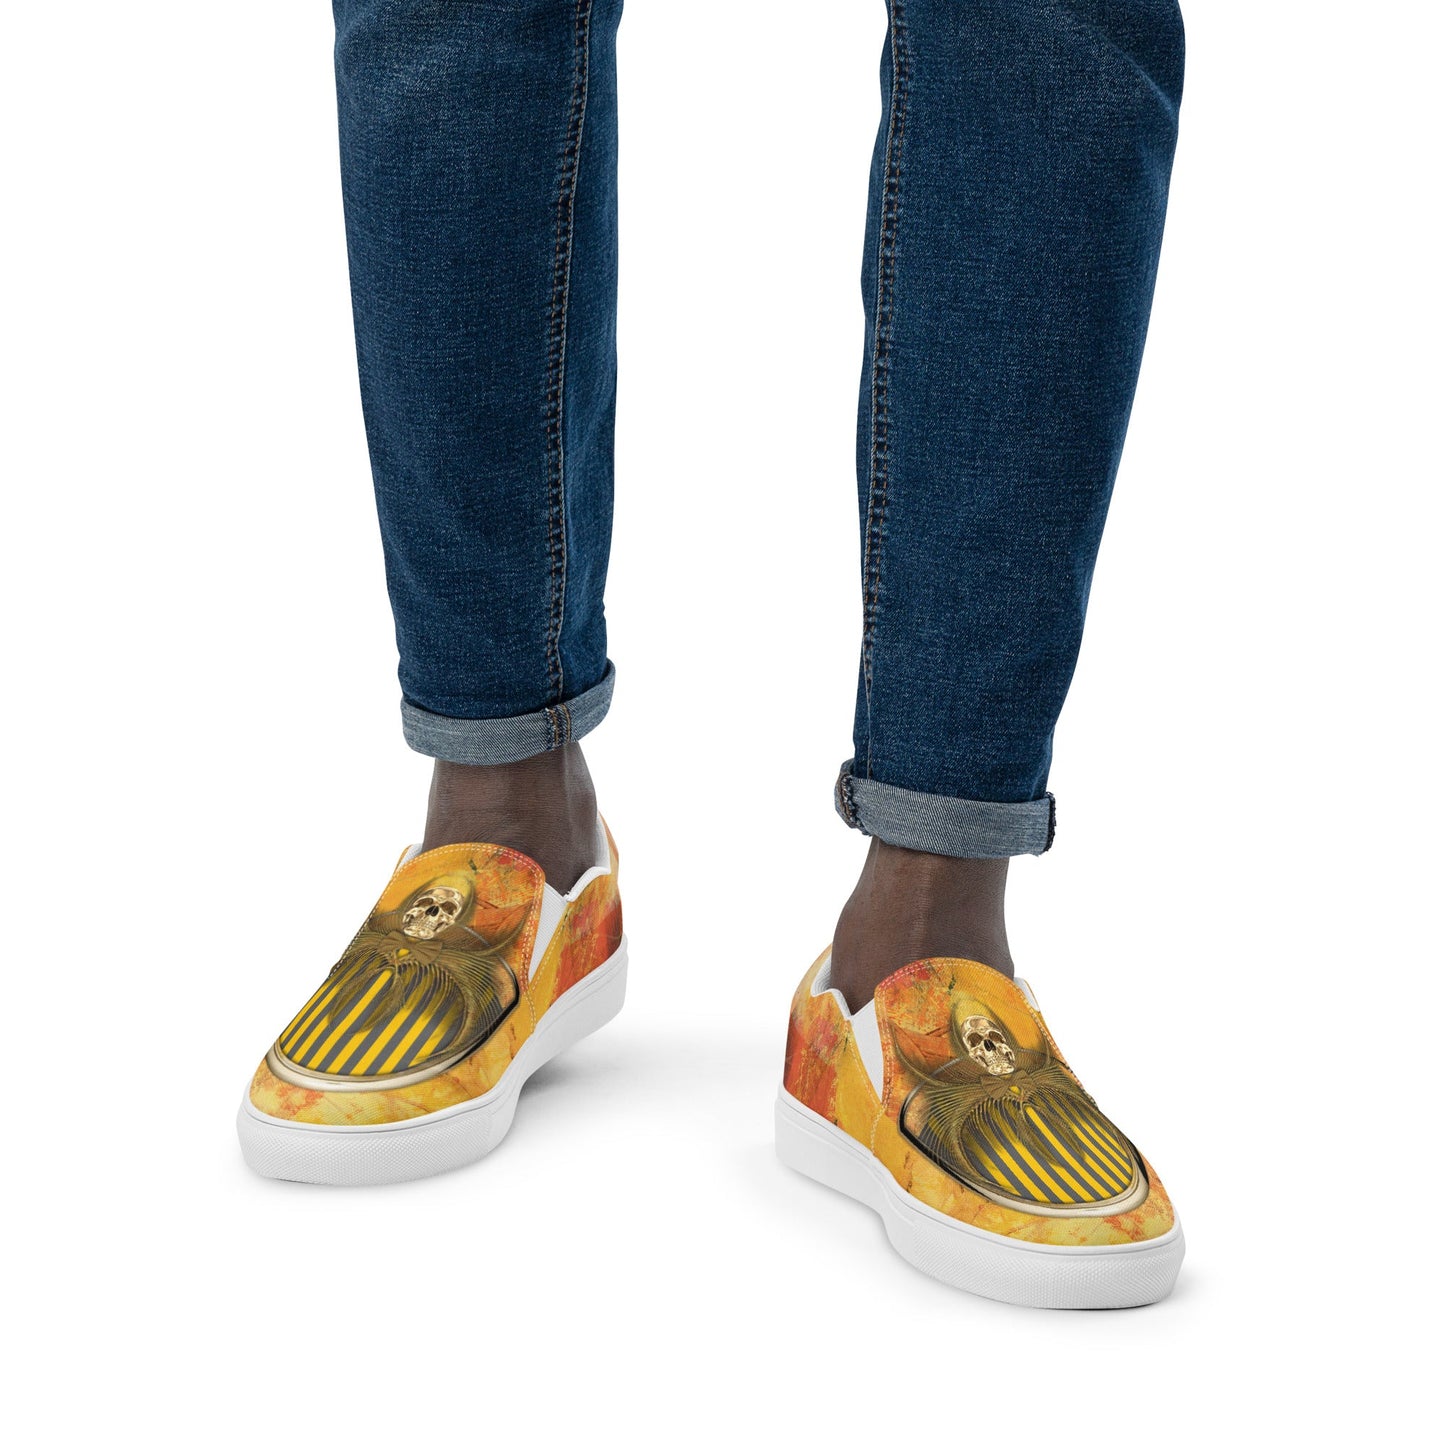 klasneakers Men’s slip-on canvas shoes - Gold Skull